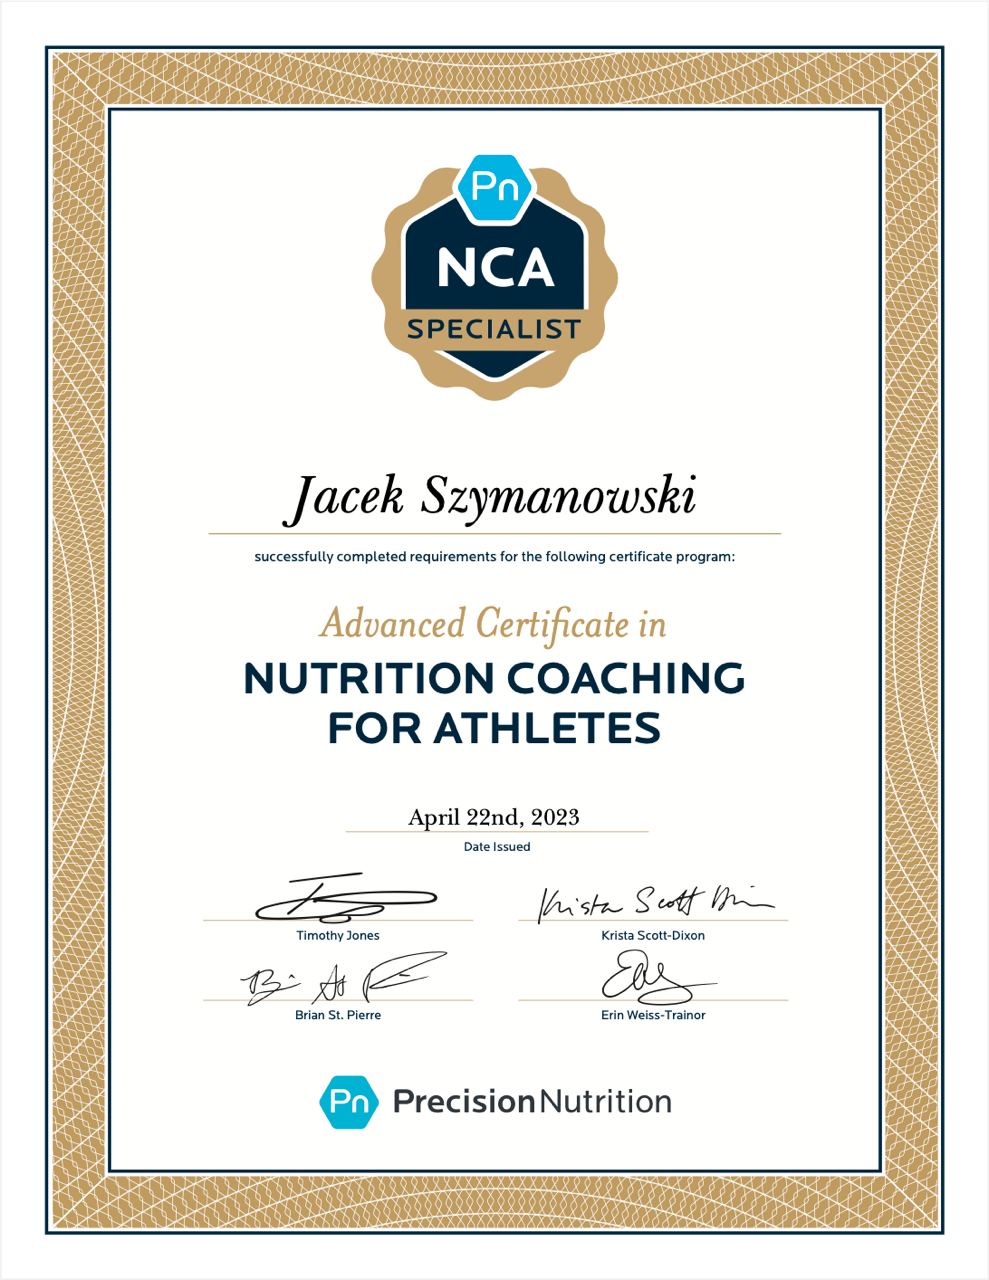 Jacek Szymanowski advanced certificate in nutrition coaching for athletes